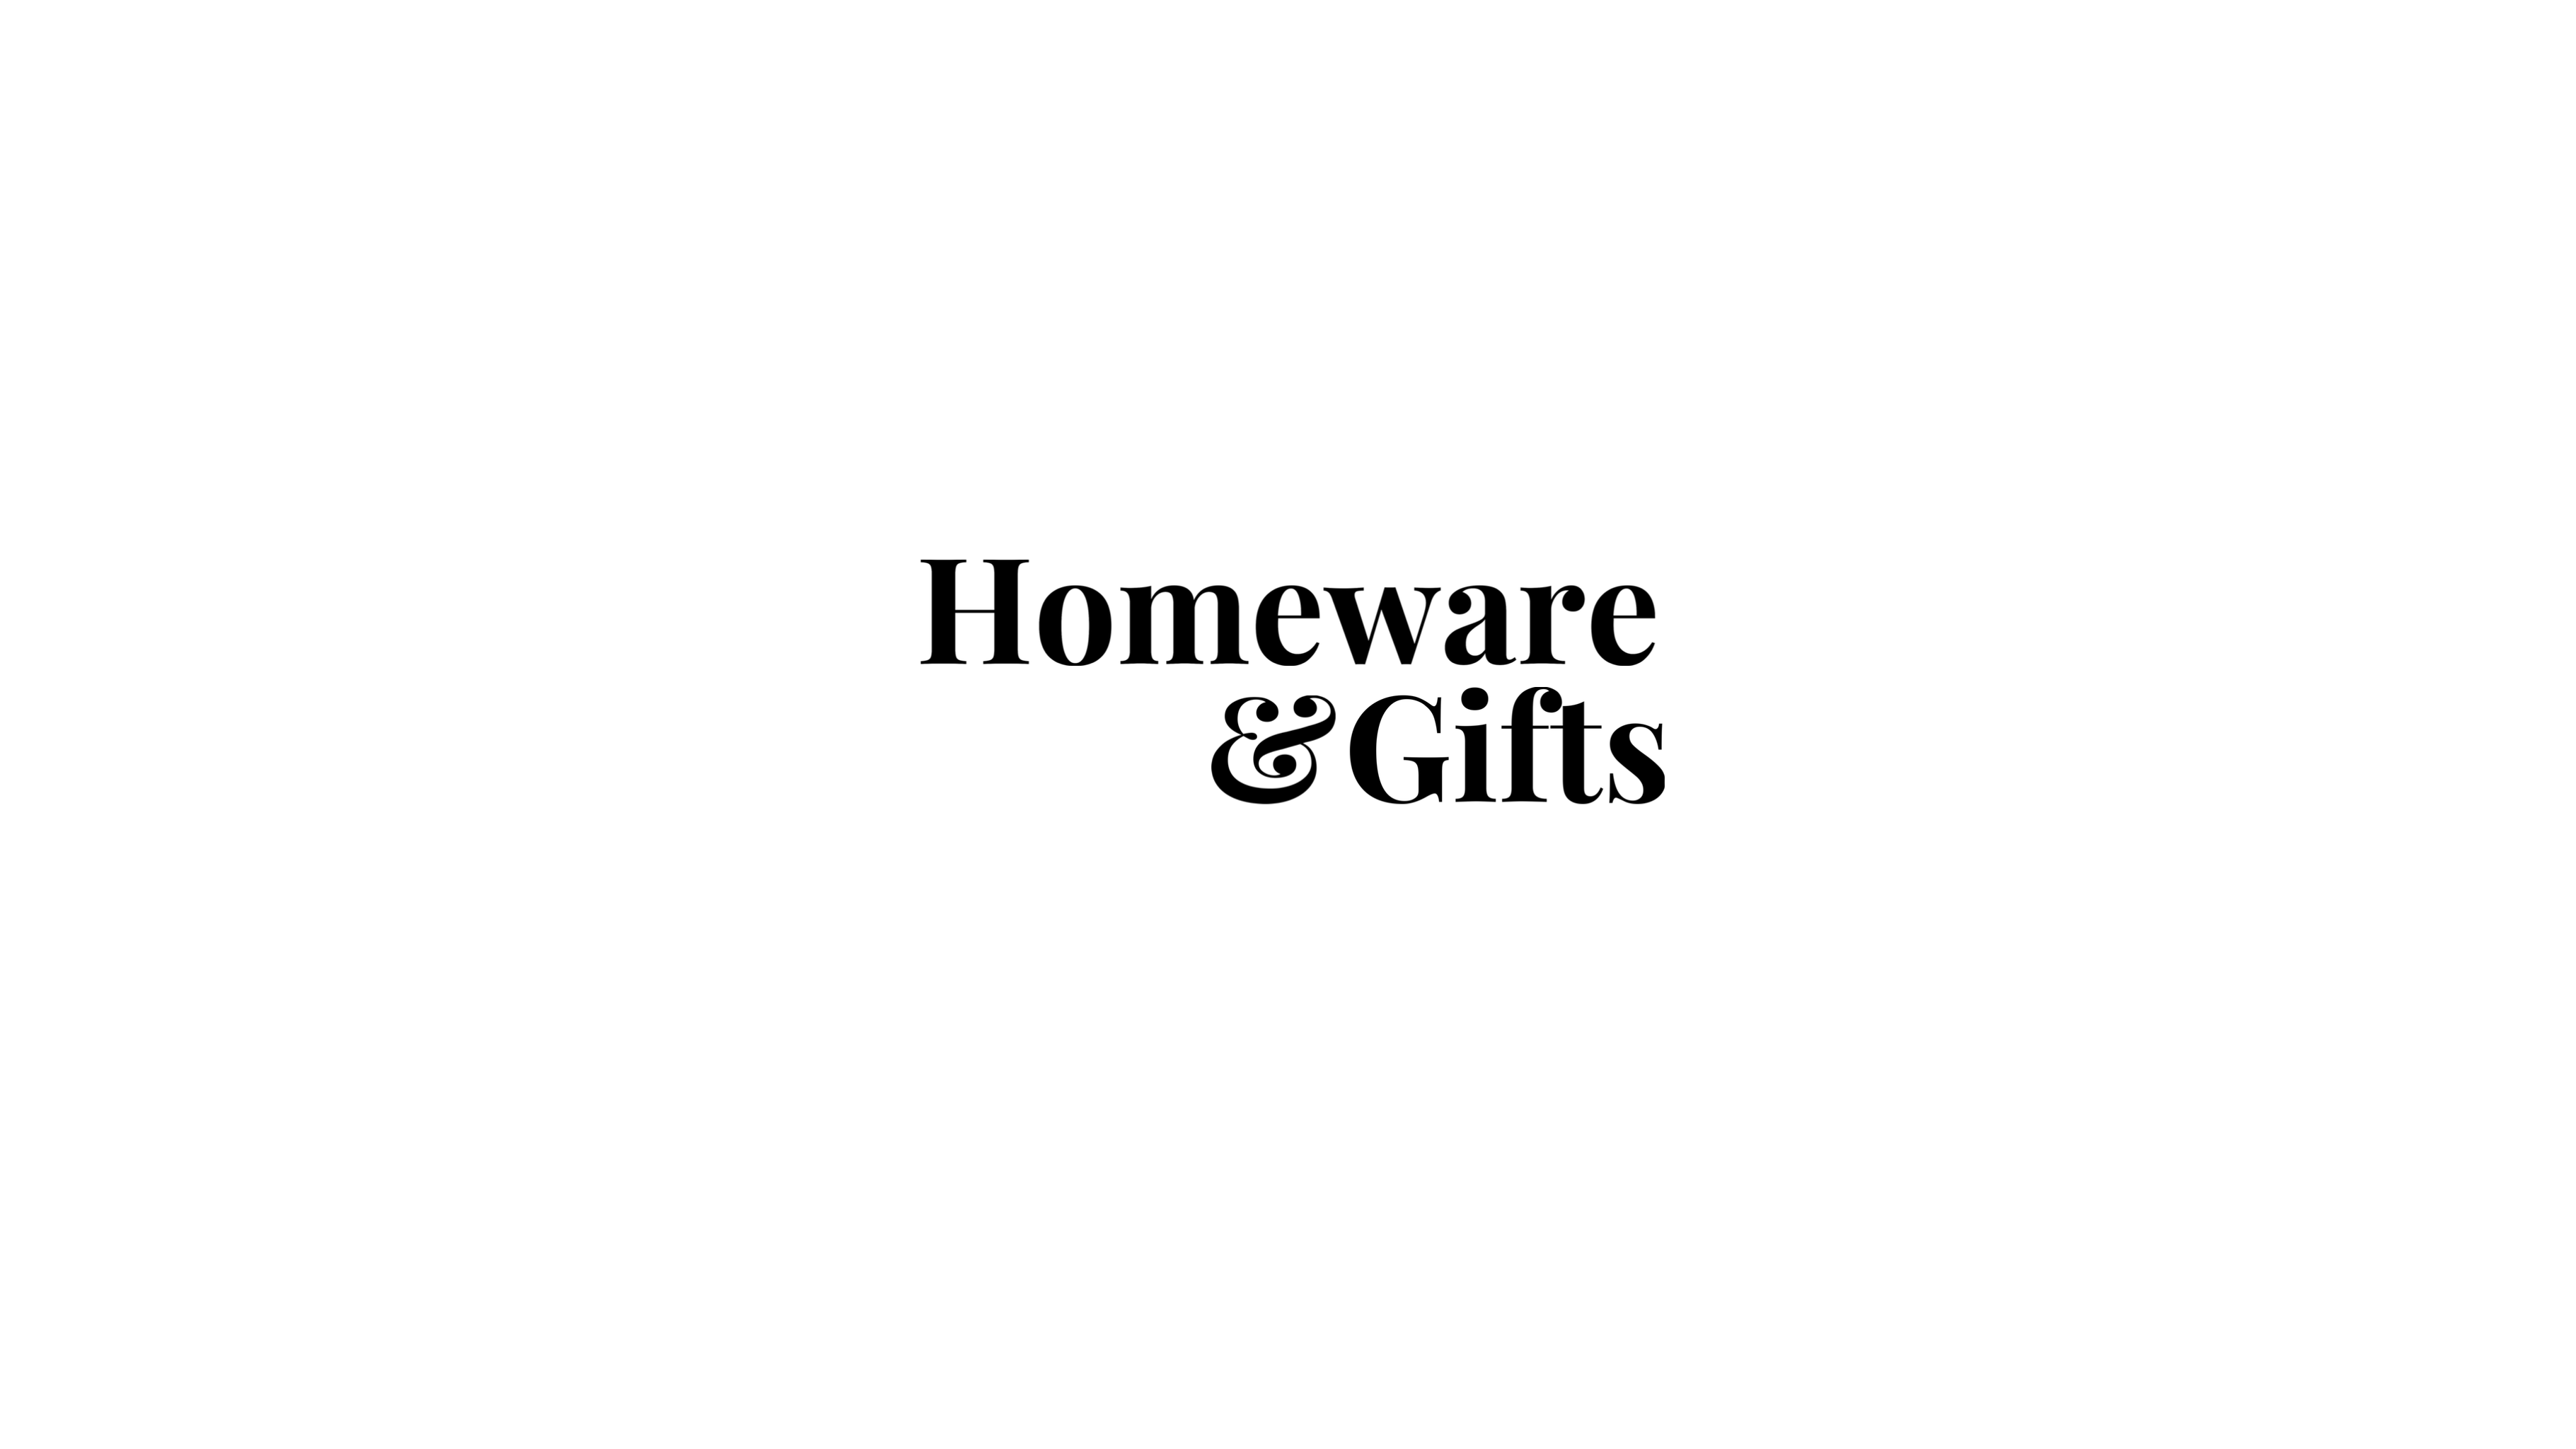 Homeware & Gifts